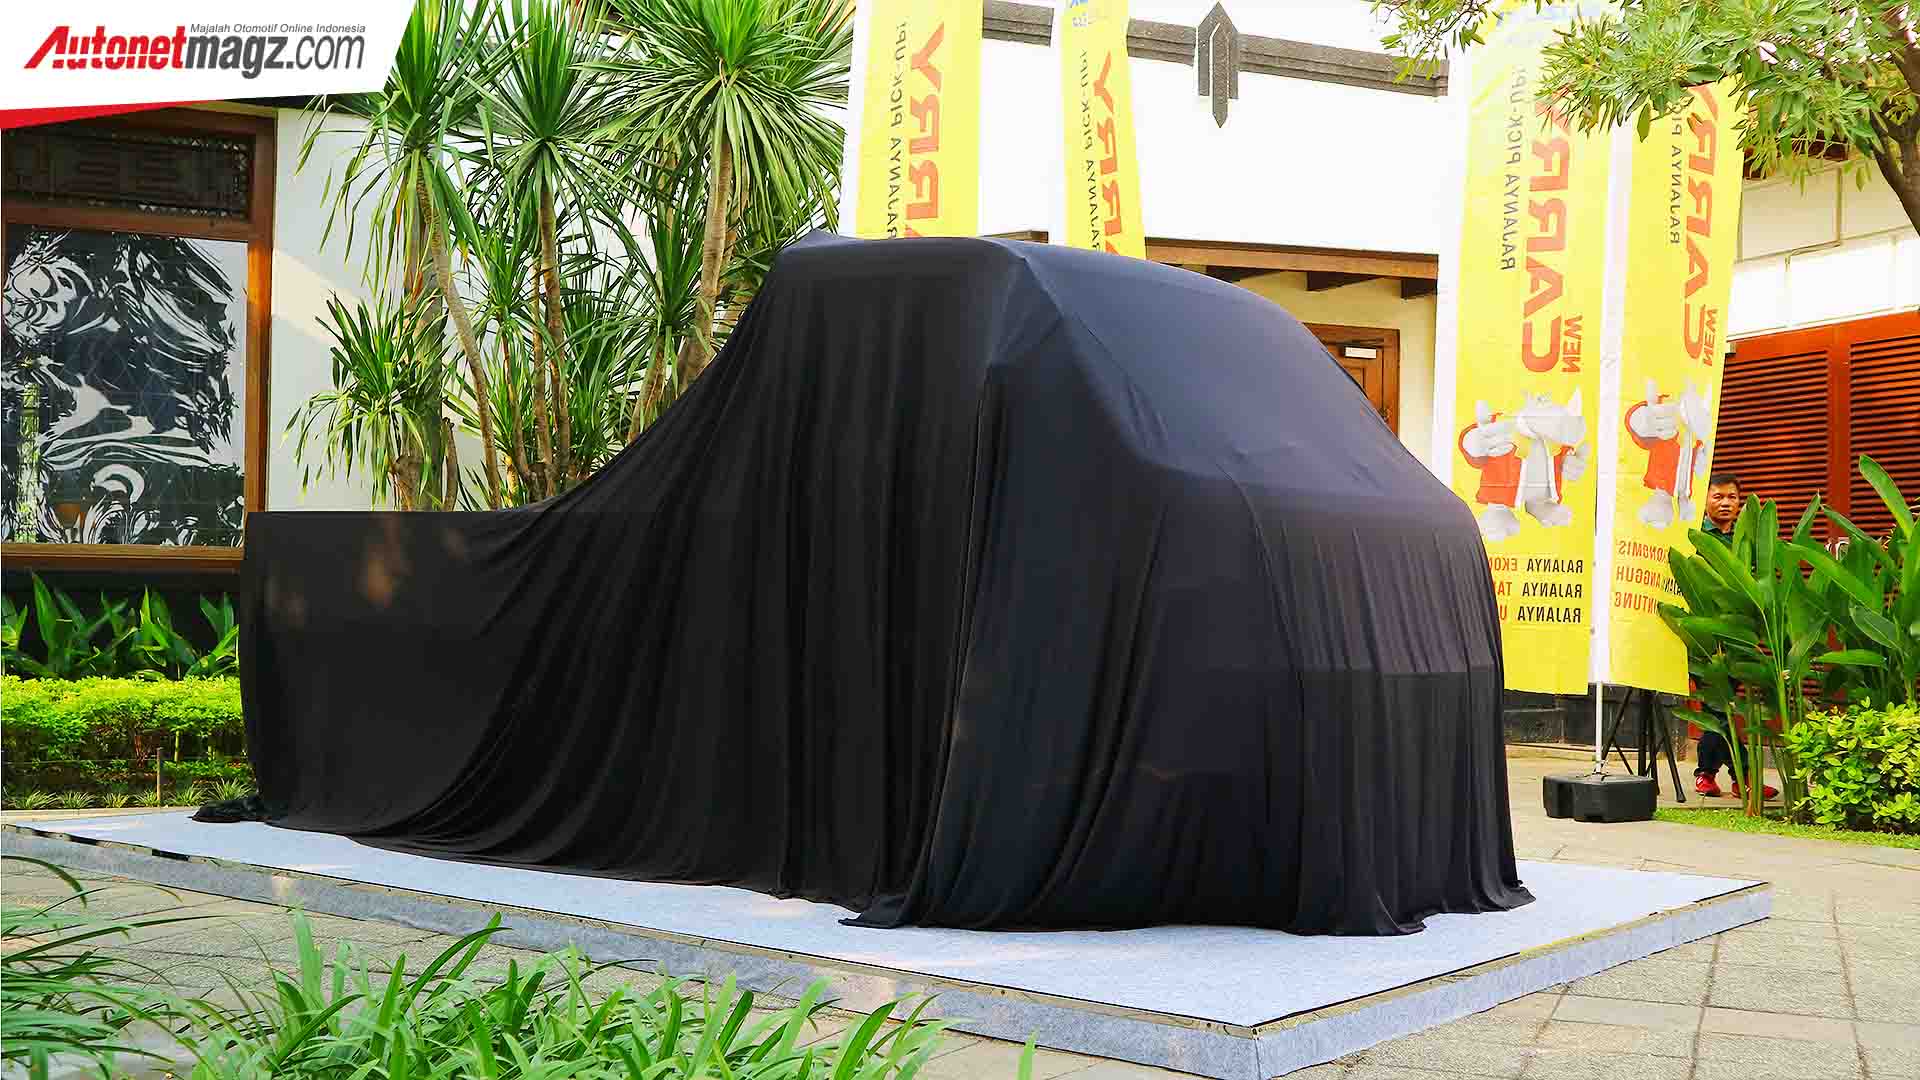 Berita, All New Suzuki Carry Pickup Surabaya: Gerak Cepat, All New Suzuki Carry Juga Dirilis di Surabaya!